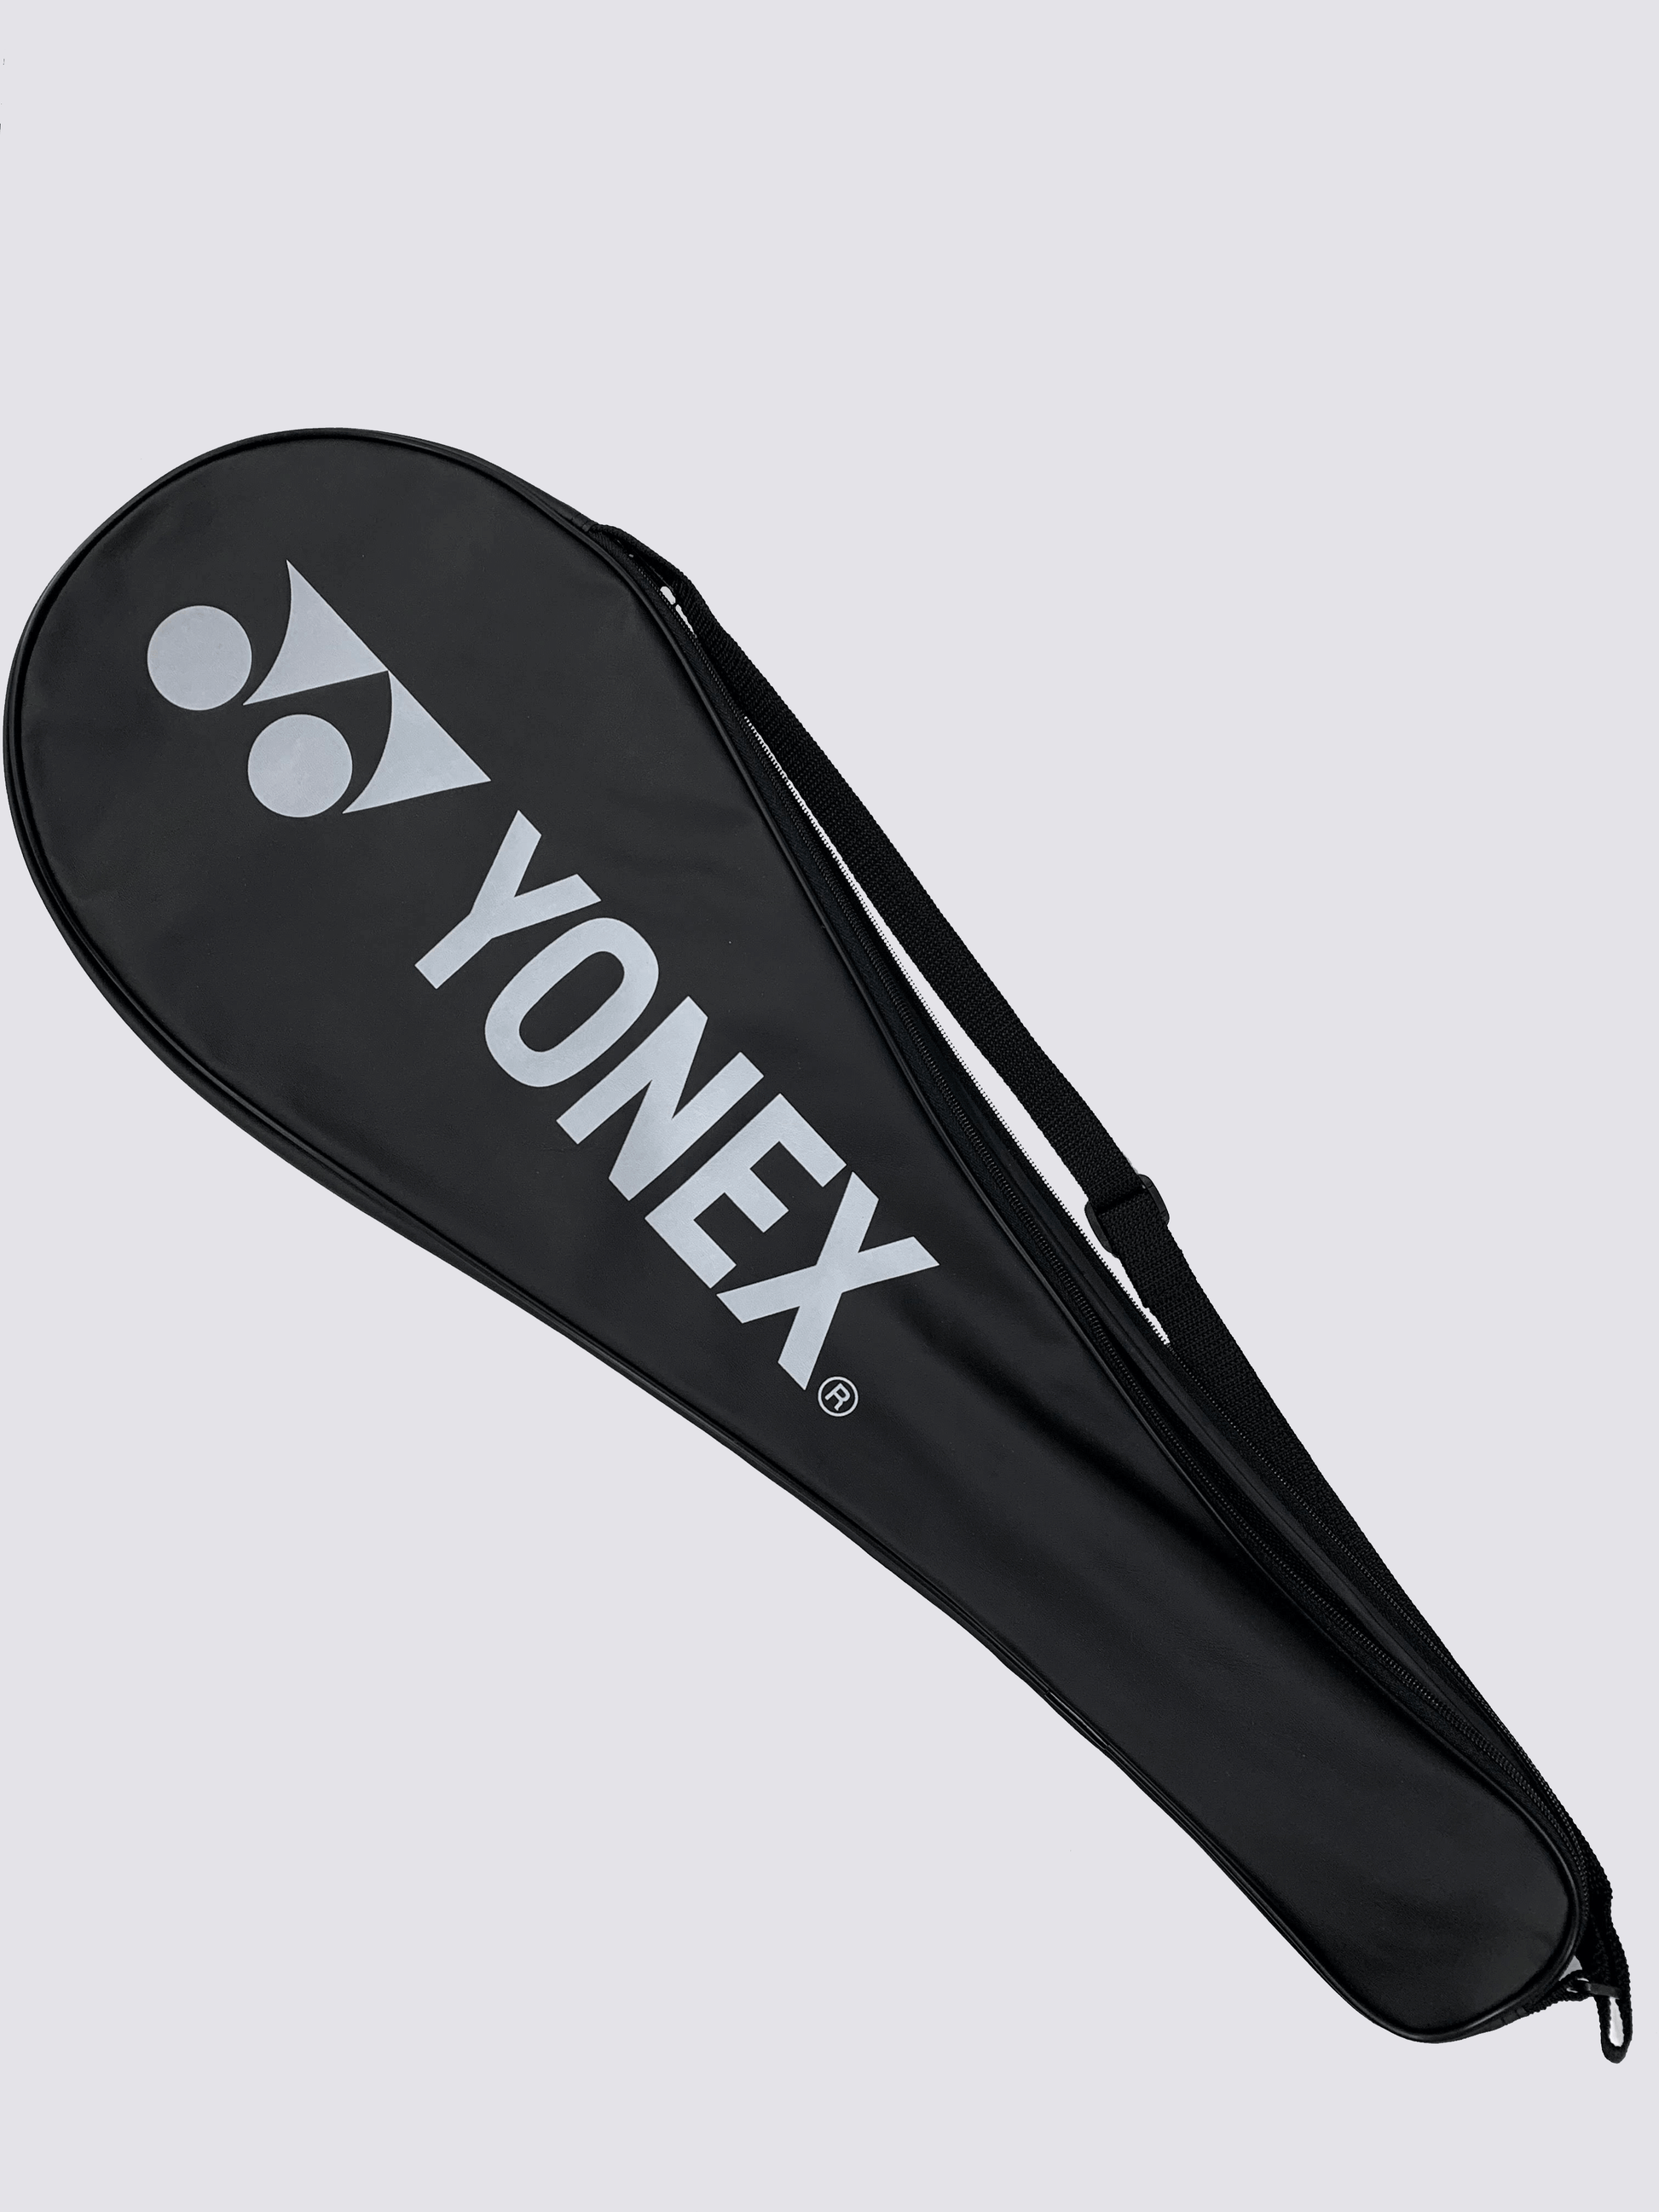 Yonex Astrox 2 (Black/Blue) Strung-5UG4- (BG 65 - 24lbs) 